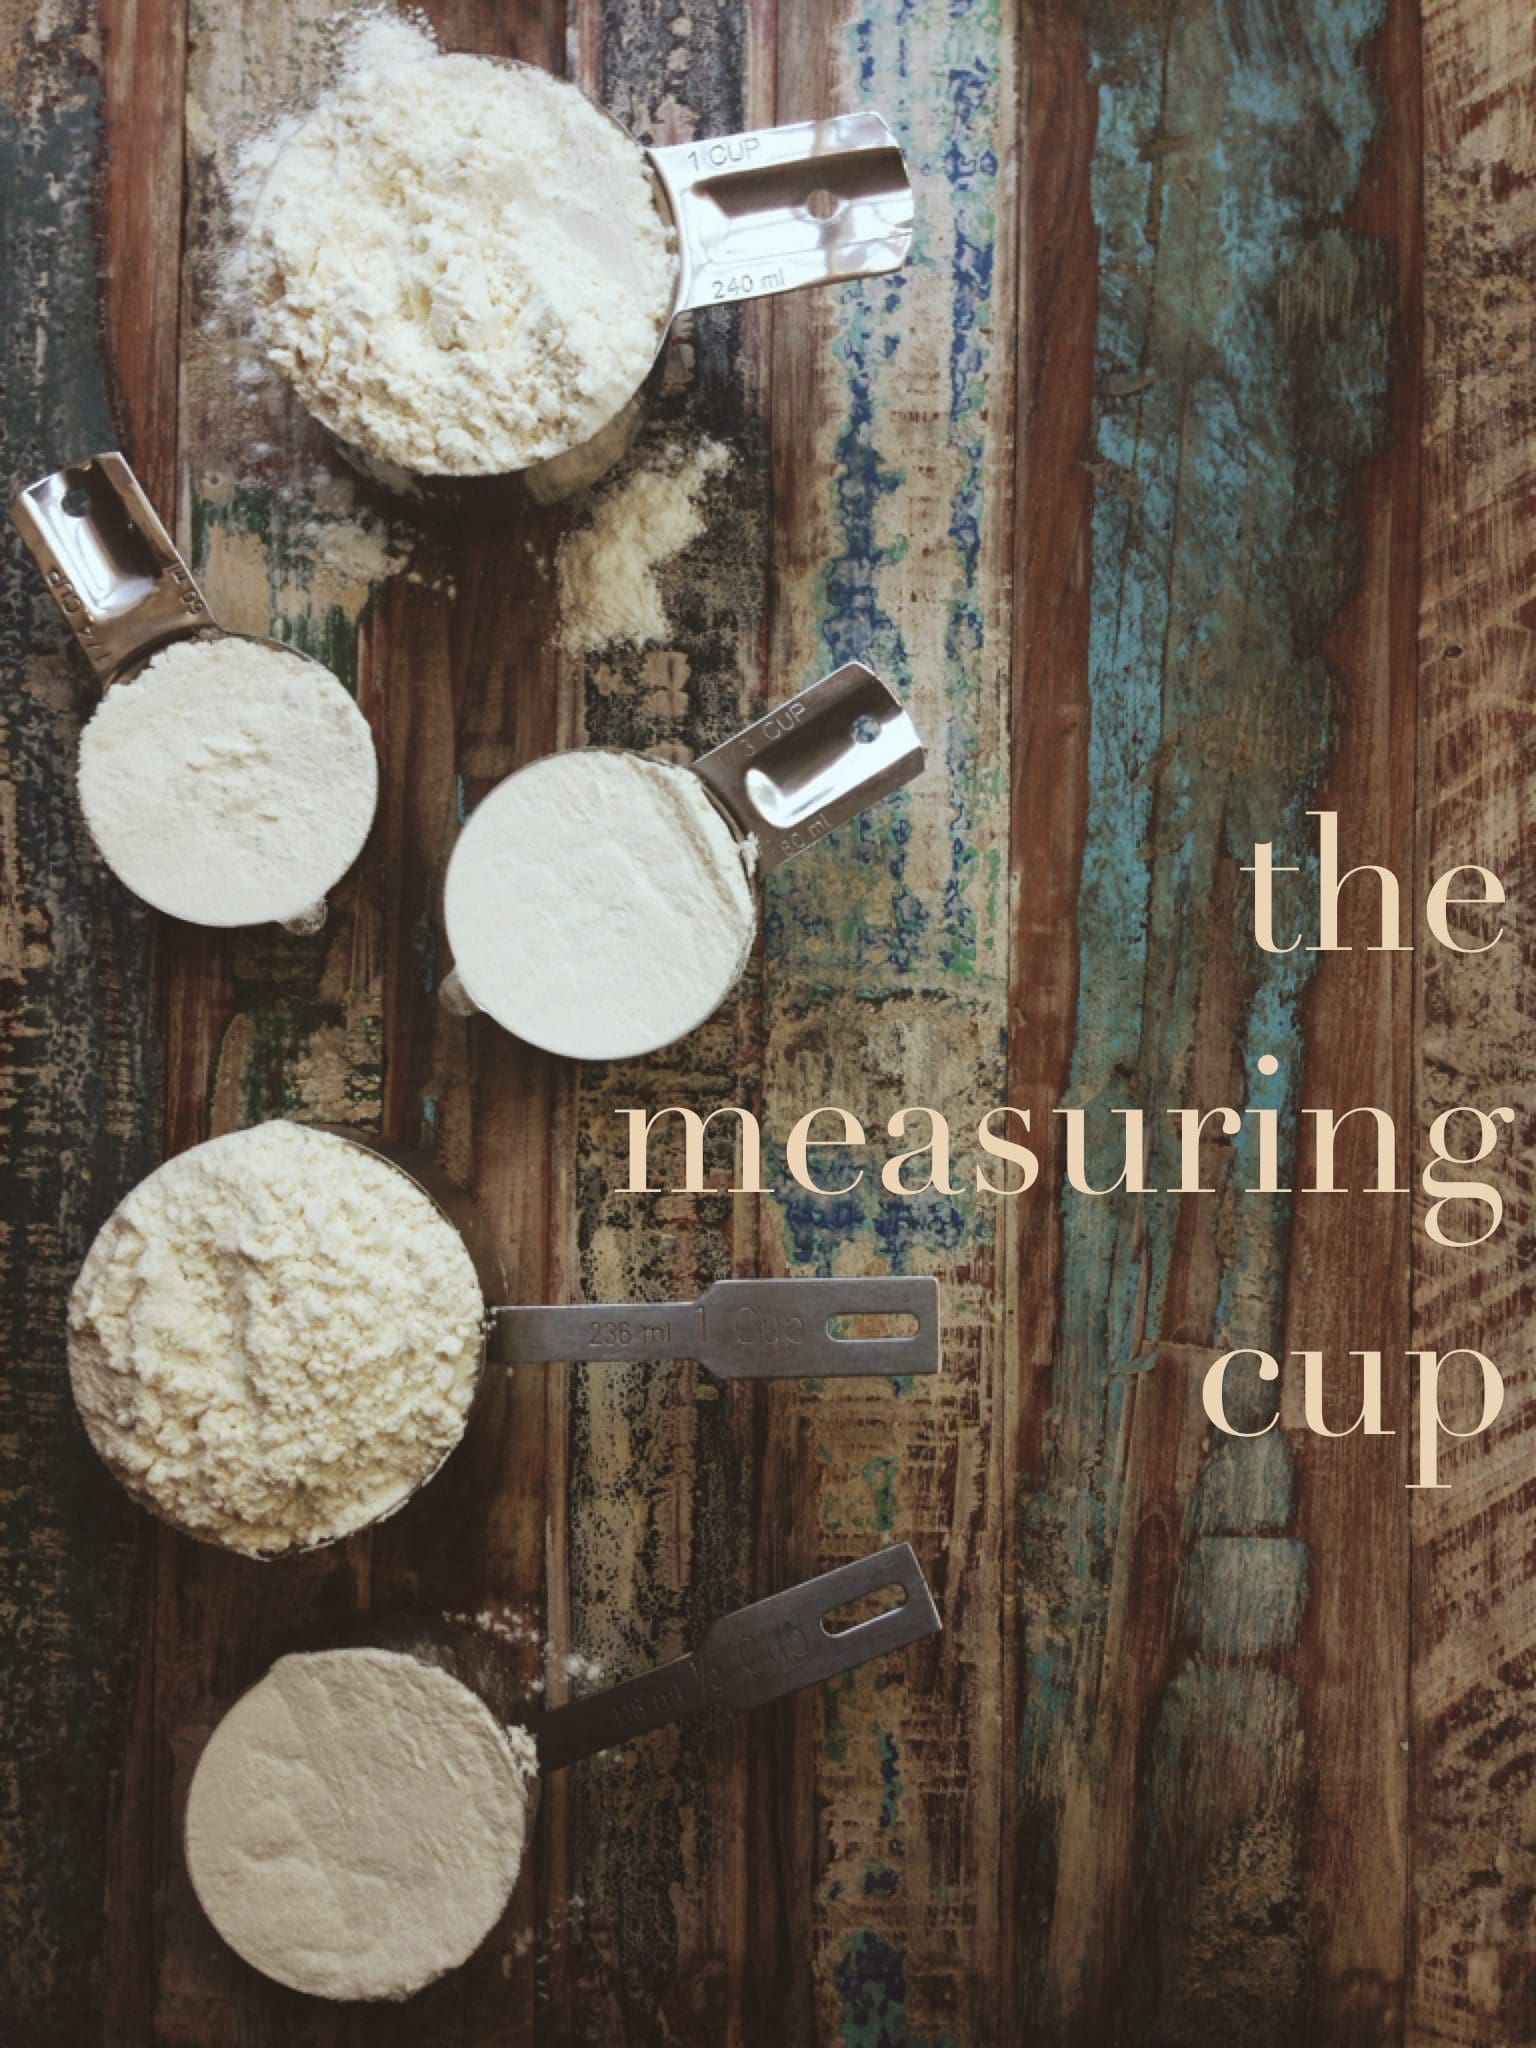 Measuring Cups - King Arthur Baking Company